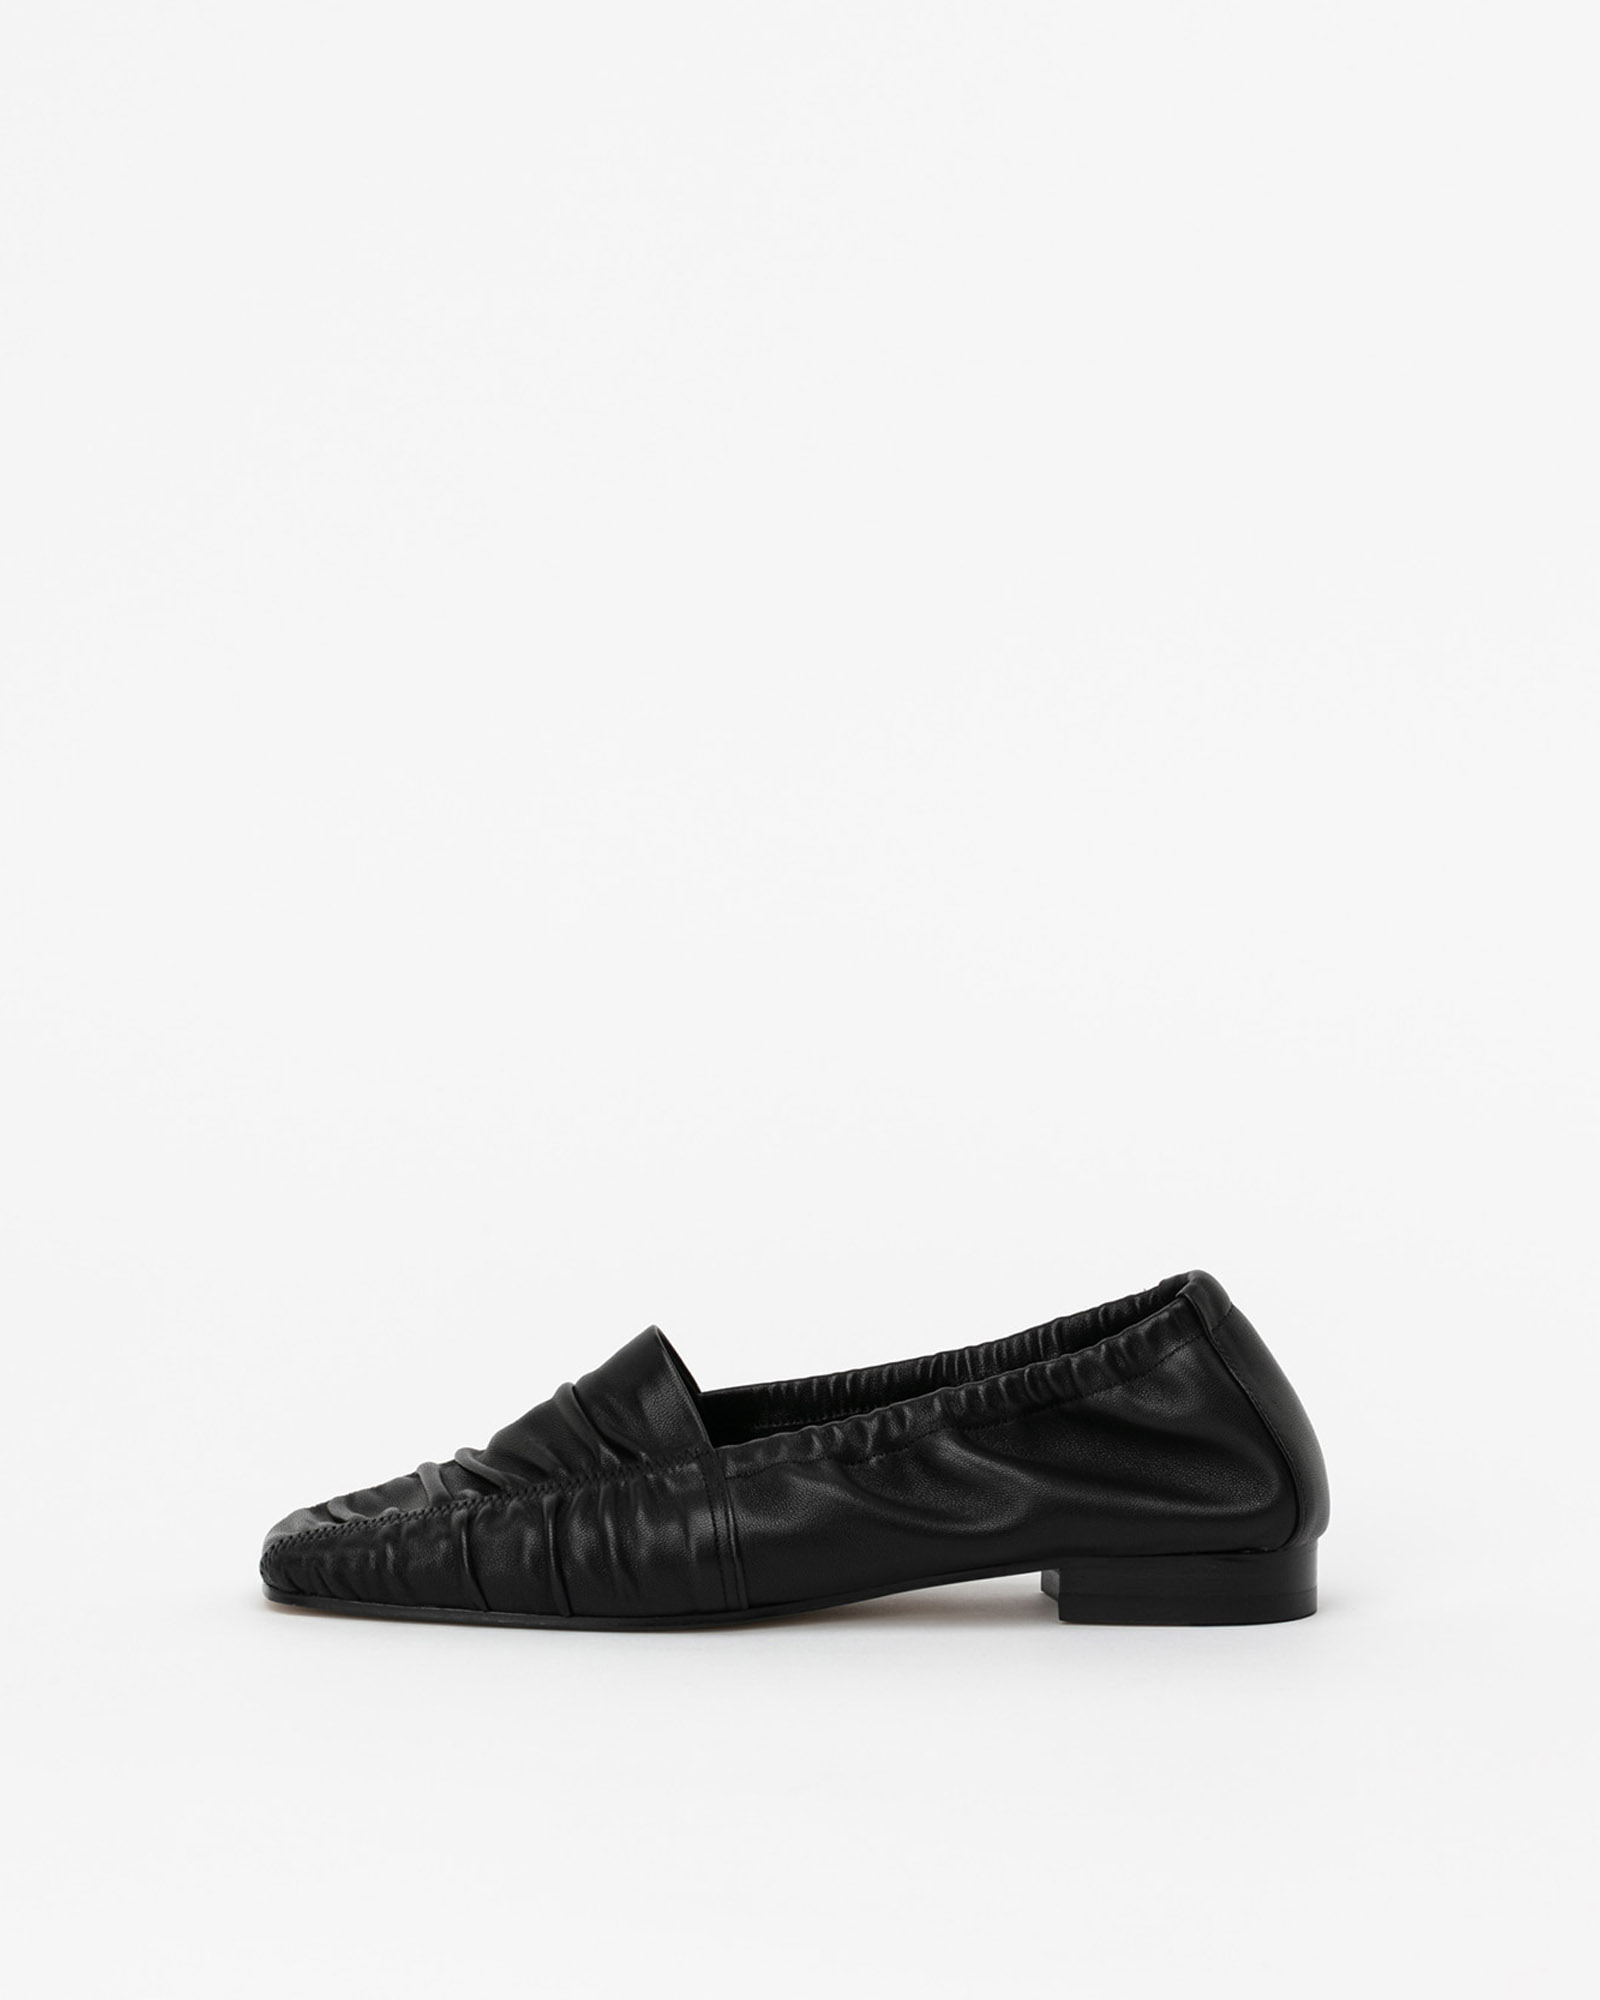 Madrid Super Soft Flat Shoes in Black